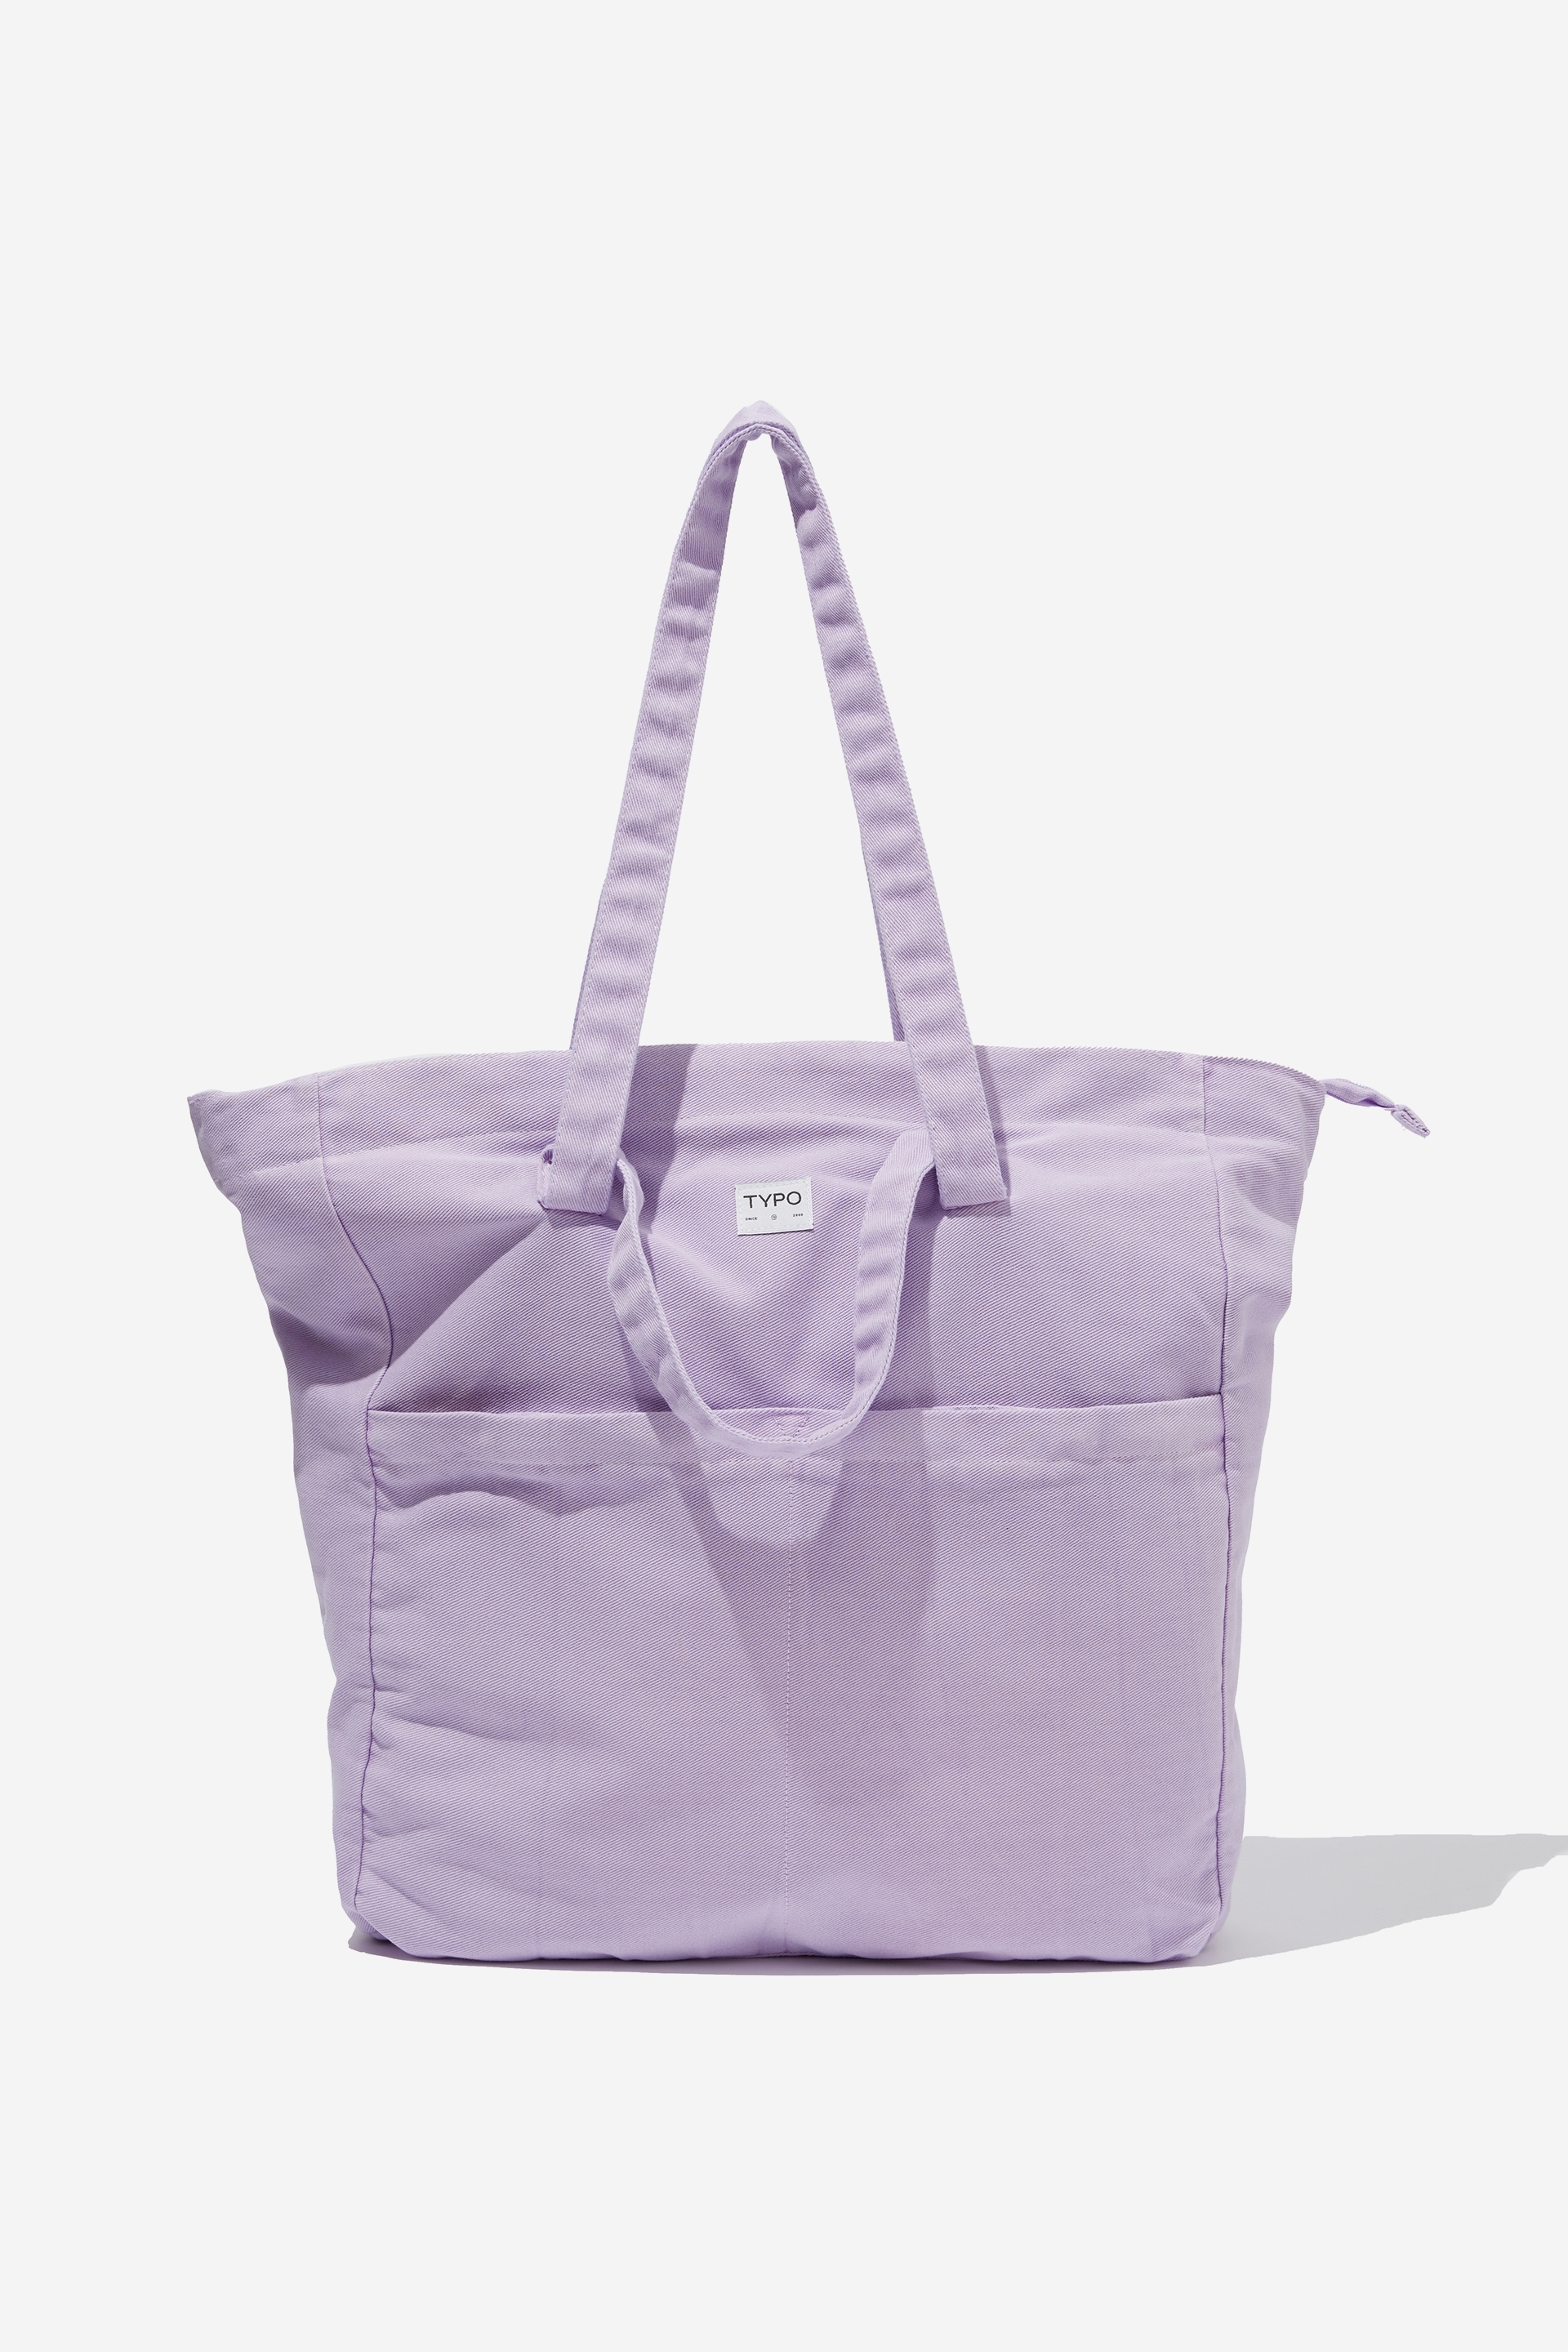 Typo - Wellness Tote Bag - Soft lilac